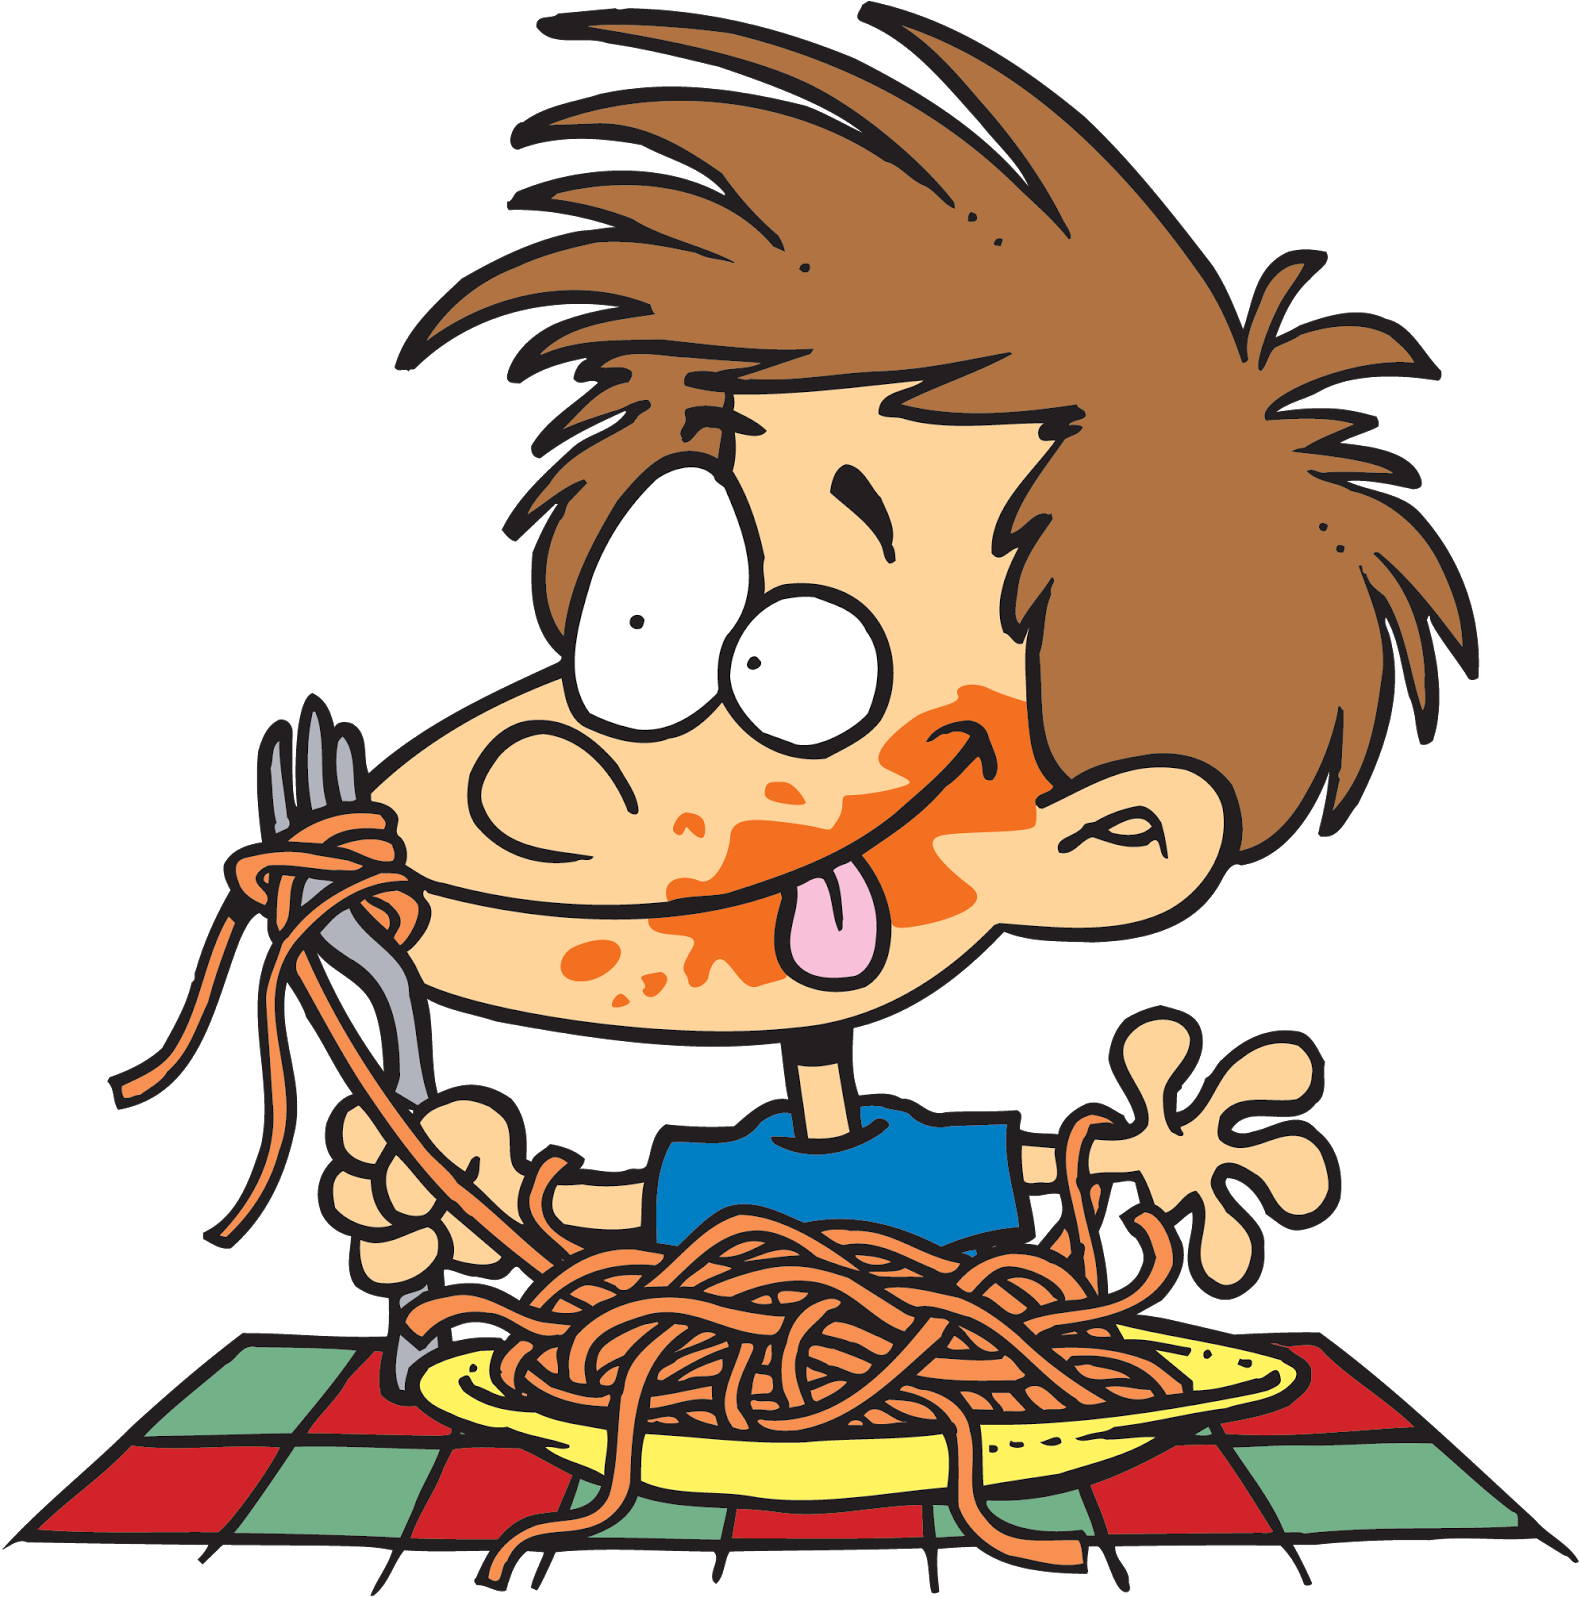 A Cartoon Of A Boy Eating Spaghetti